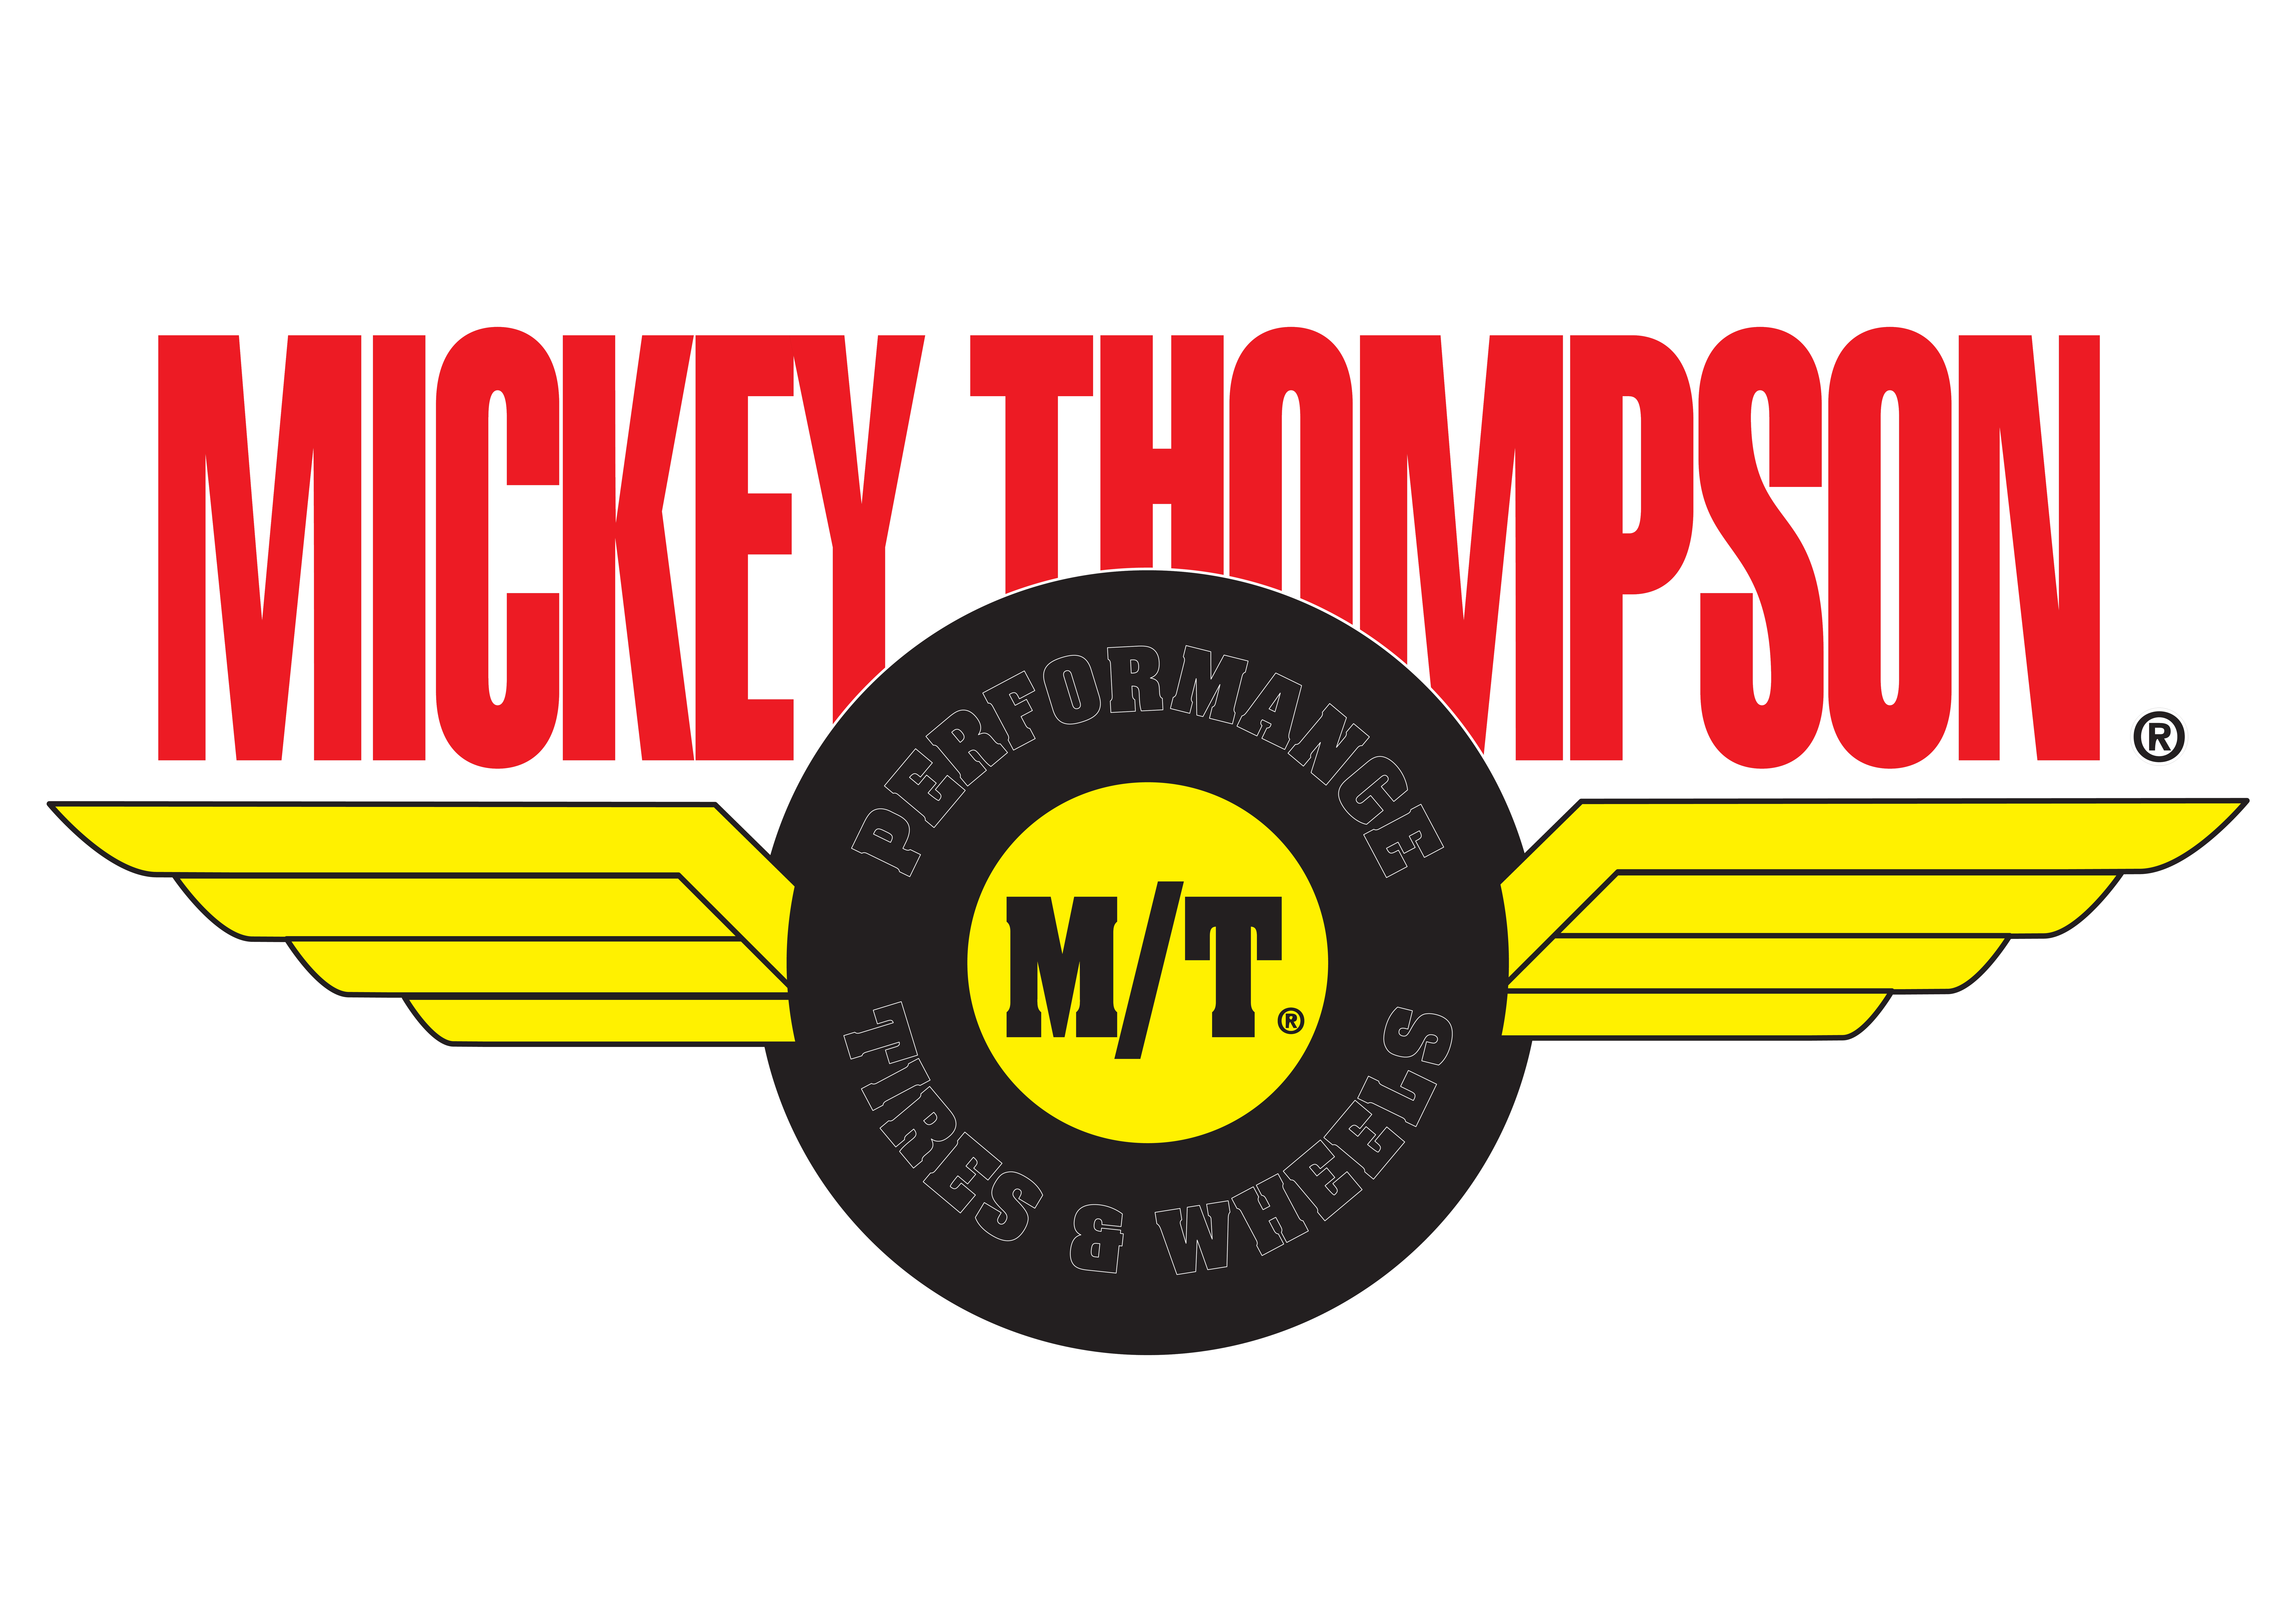 https://www.beadlok.com/Logo/Mickey%20Thompson.jpg